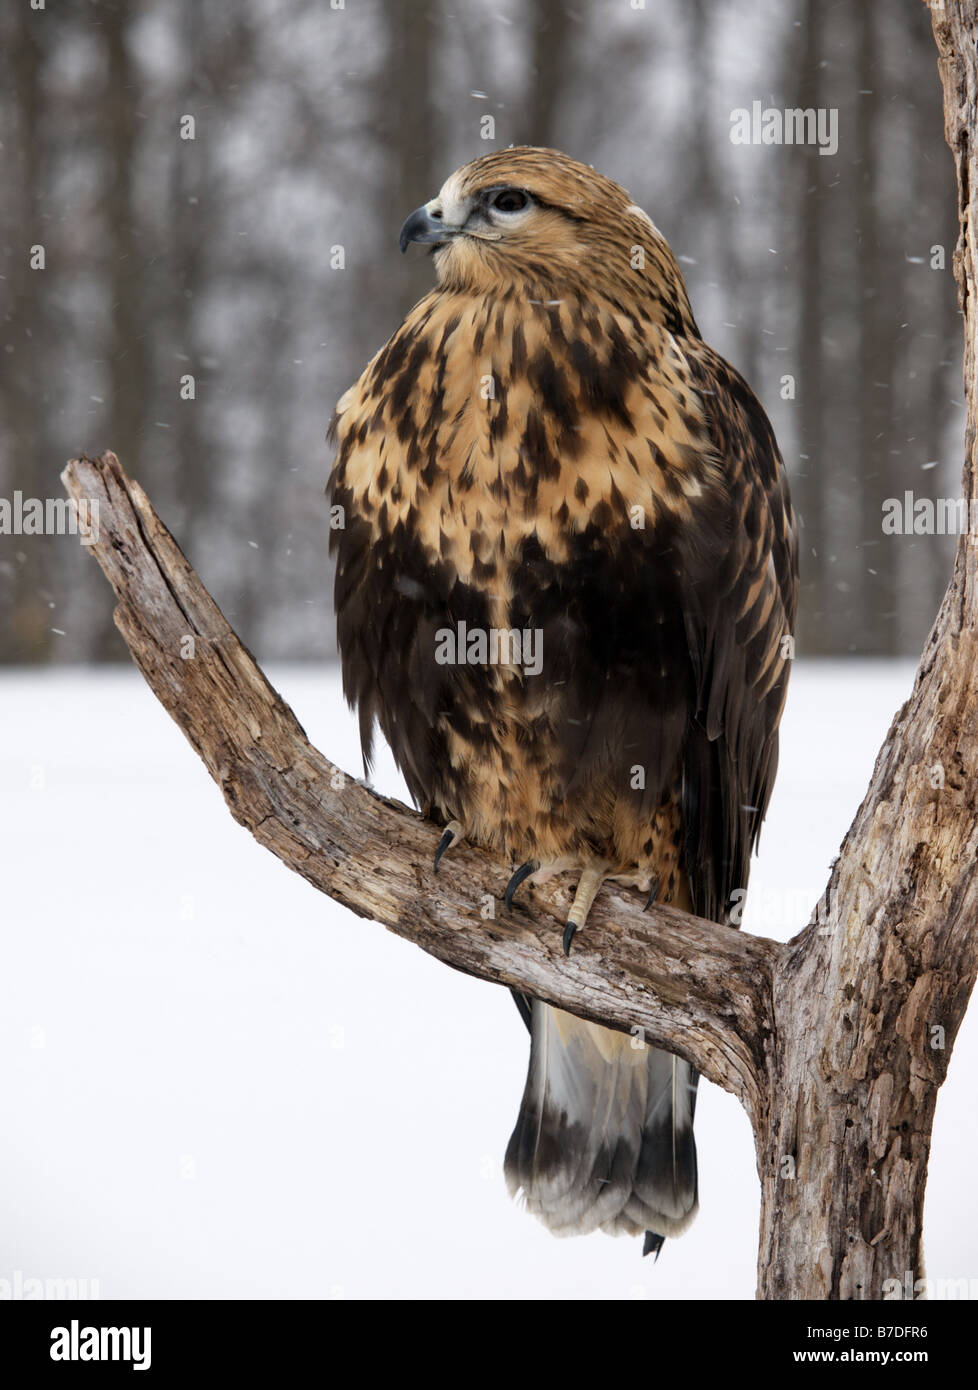 Full body shot of Rough-legged Hawk (Falconiformes) perched on a barren tree branch in a winter scene. Stock Photo